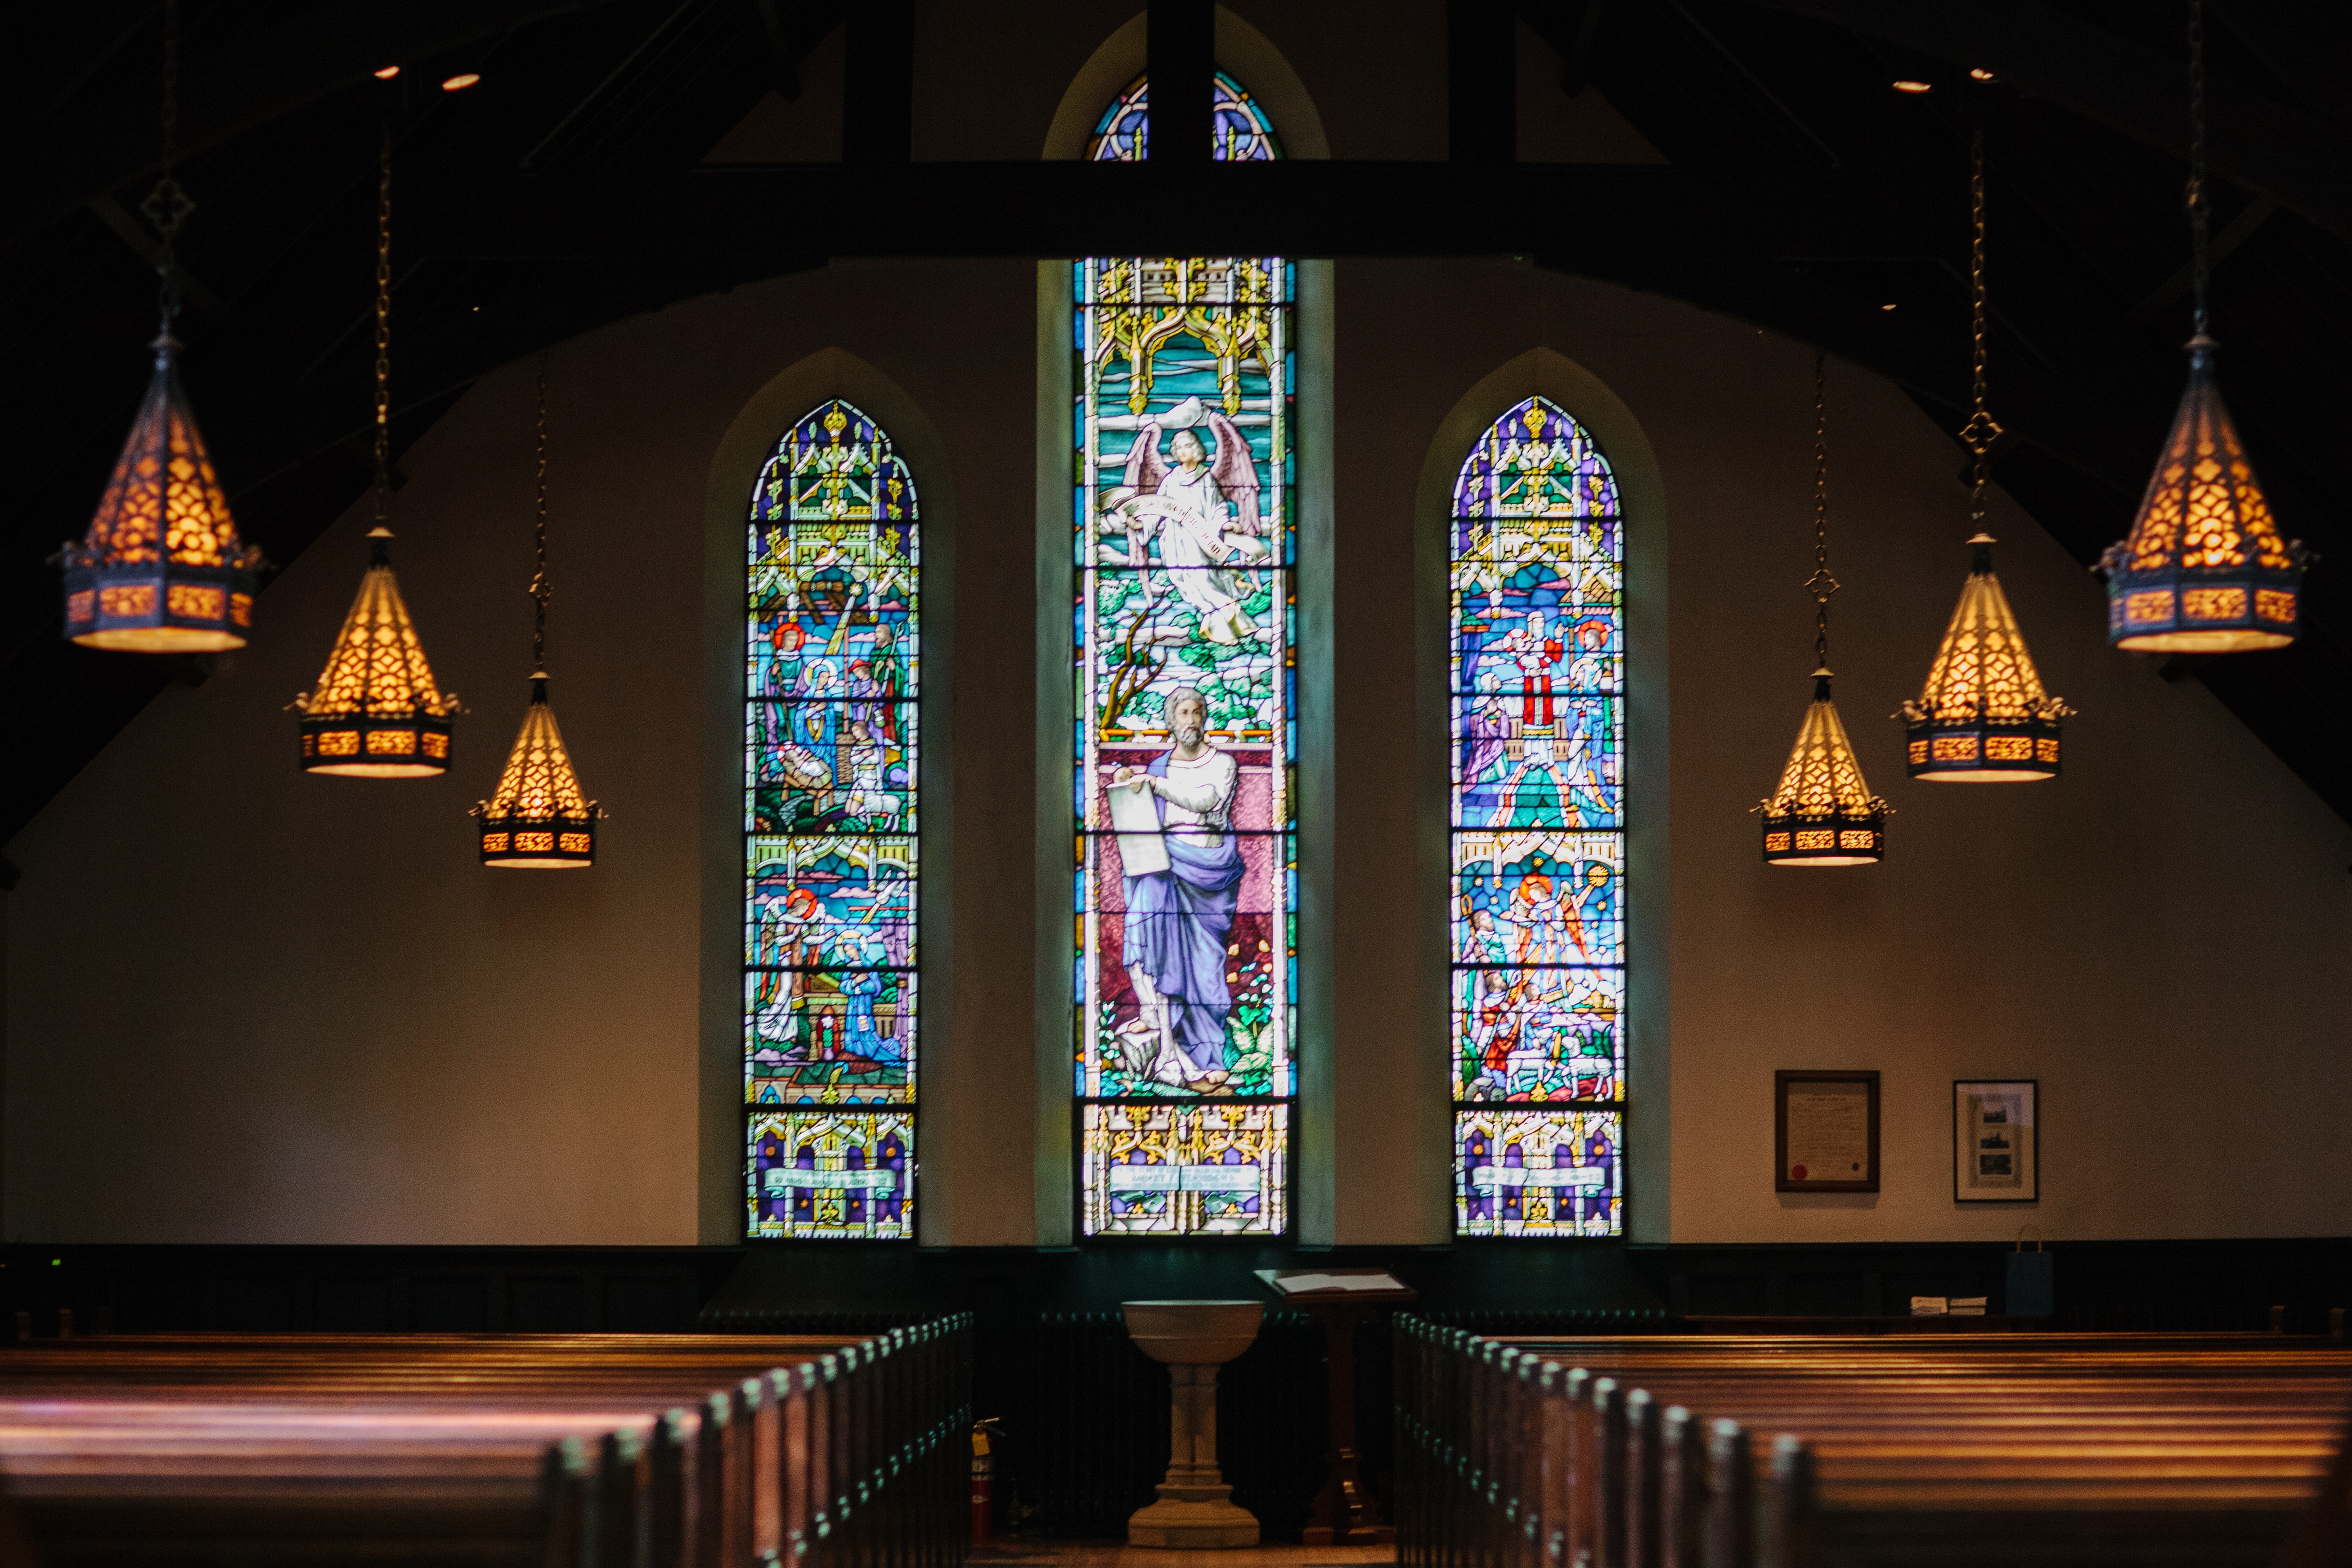 tiffany glass religious wall decor inside church